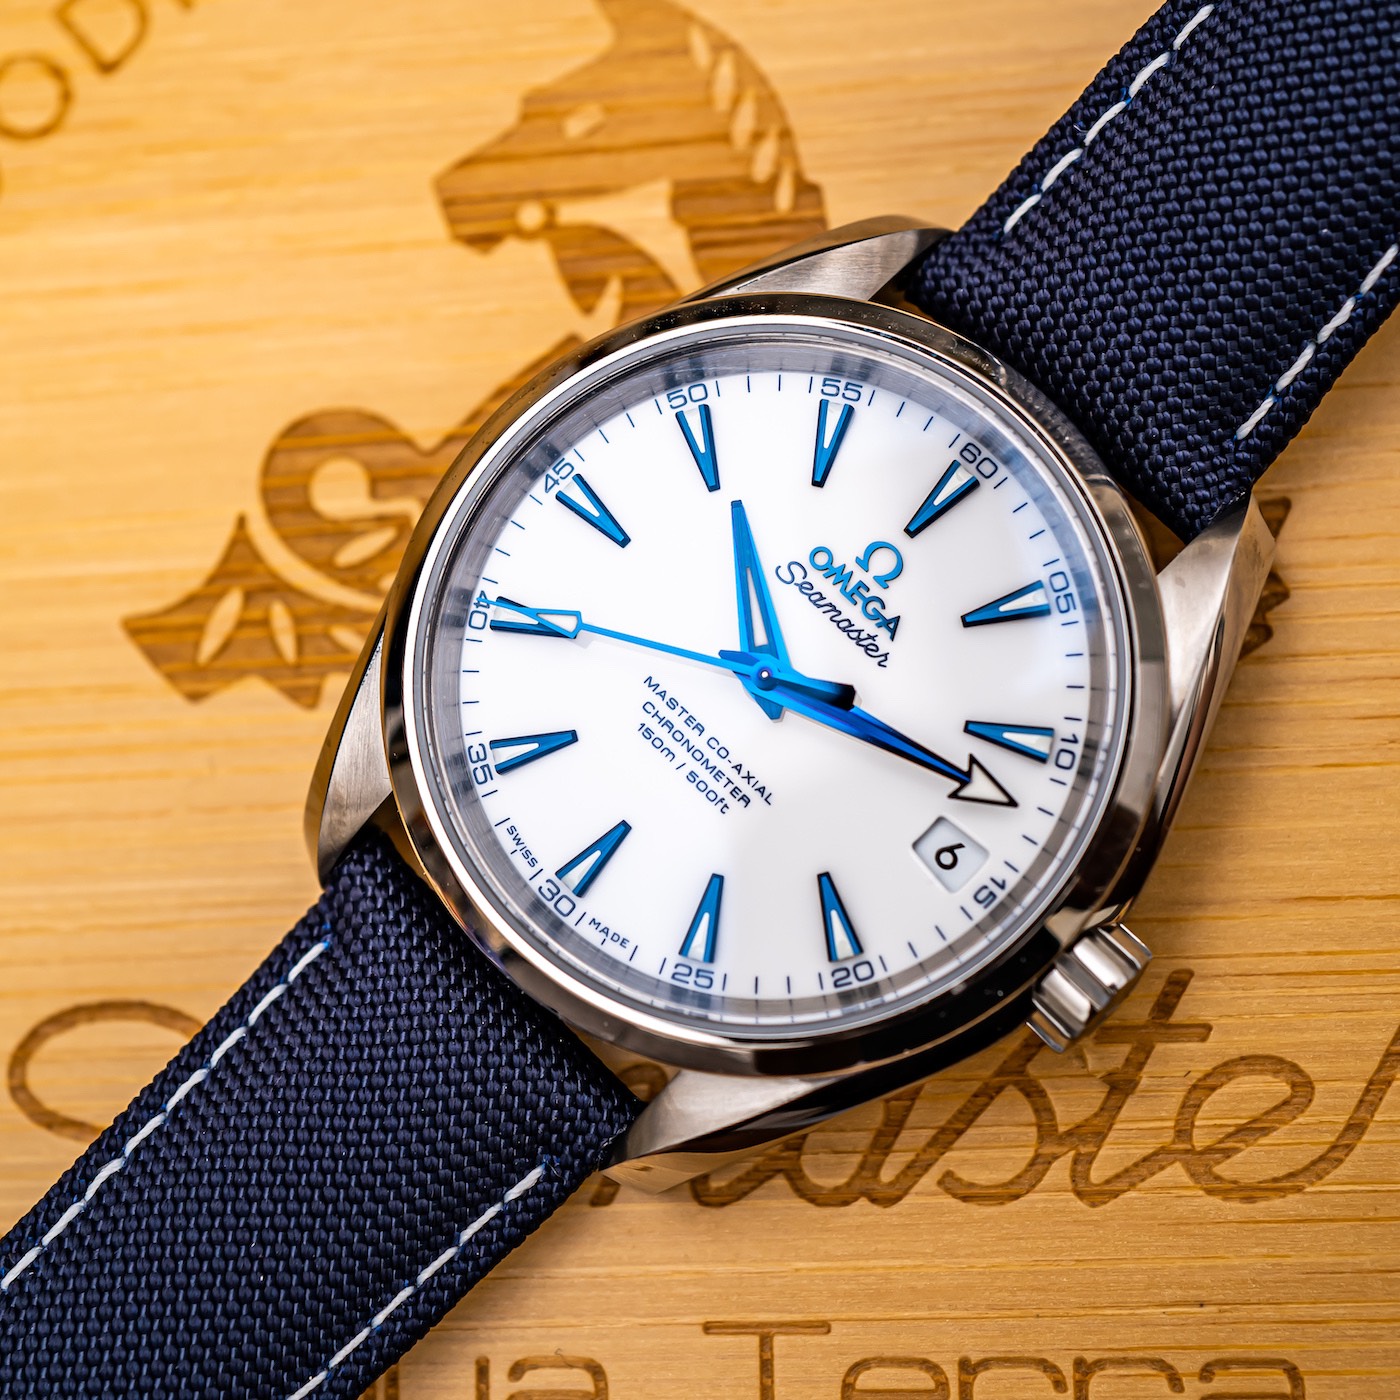 omega watches on ebay